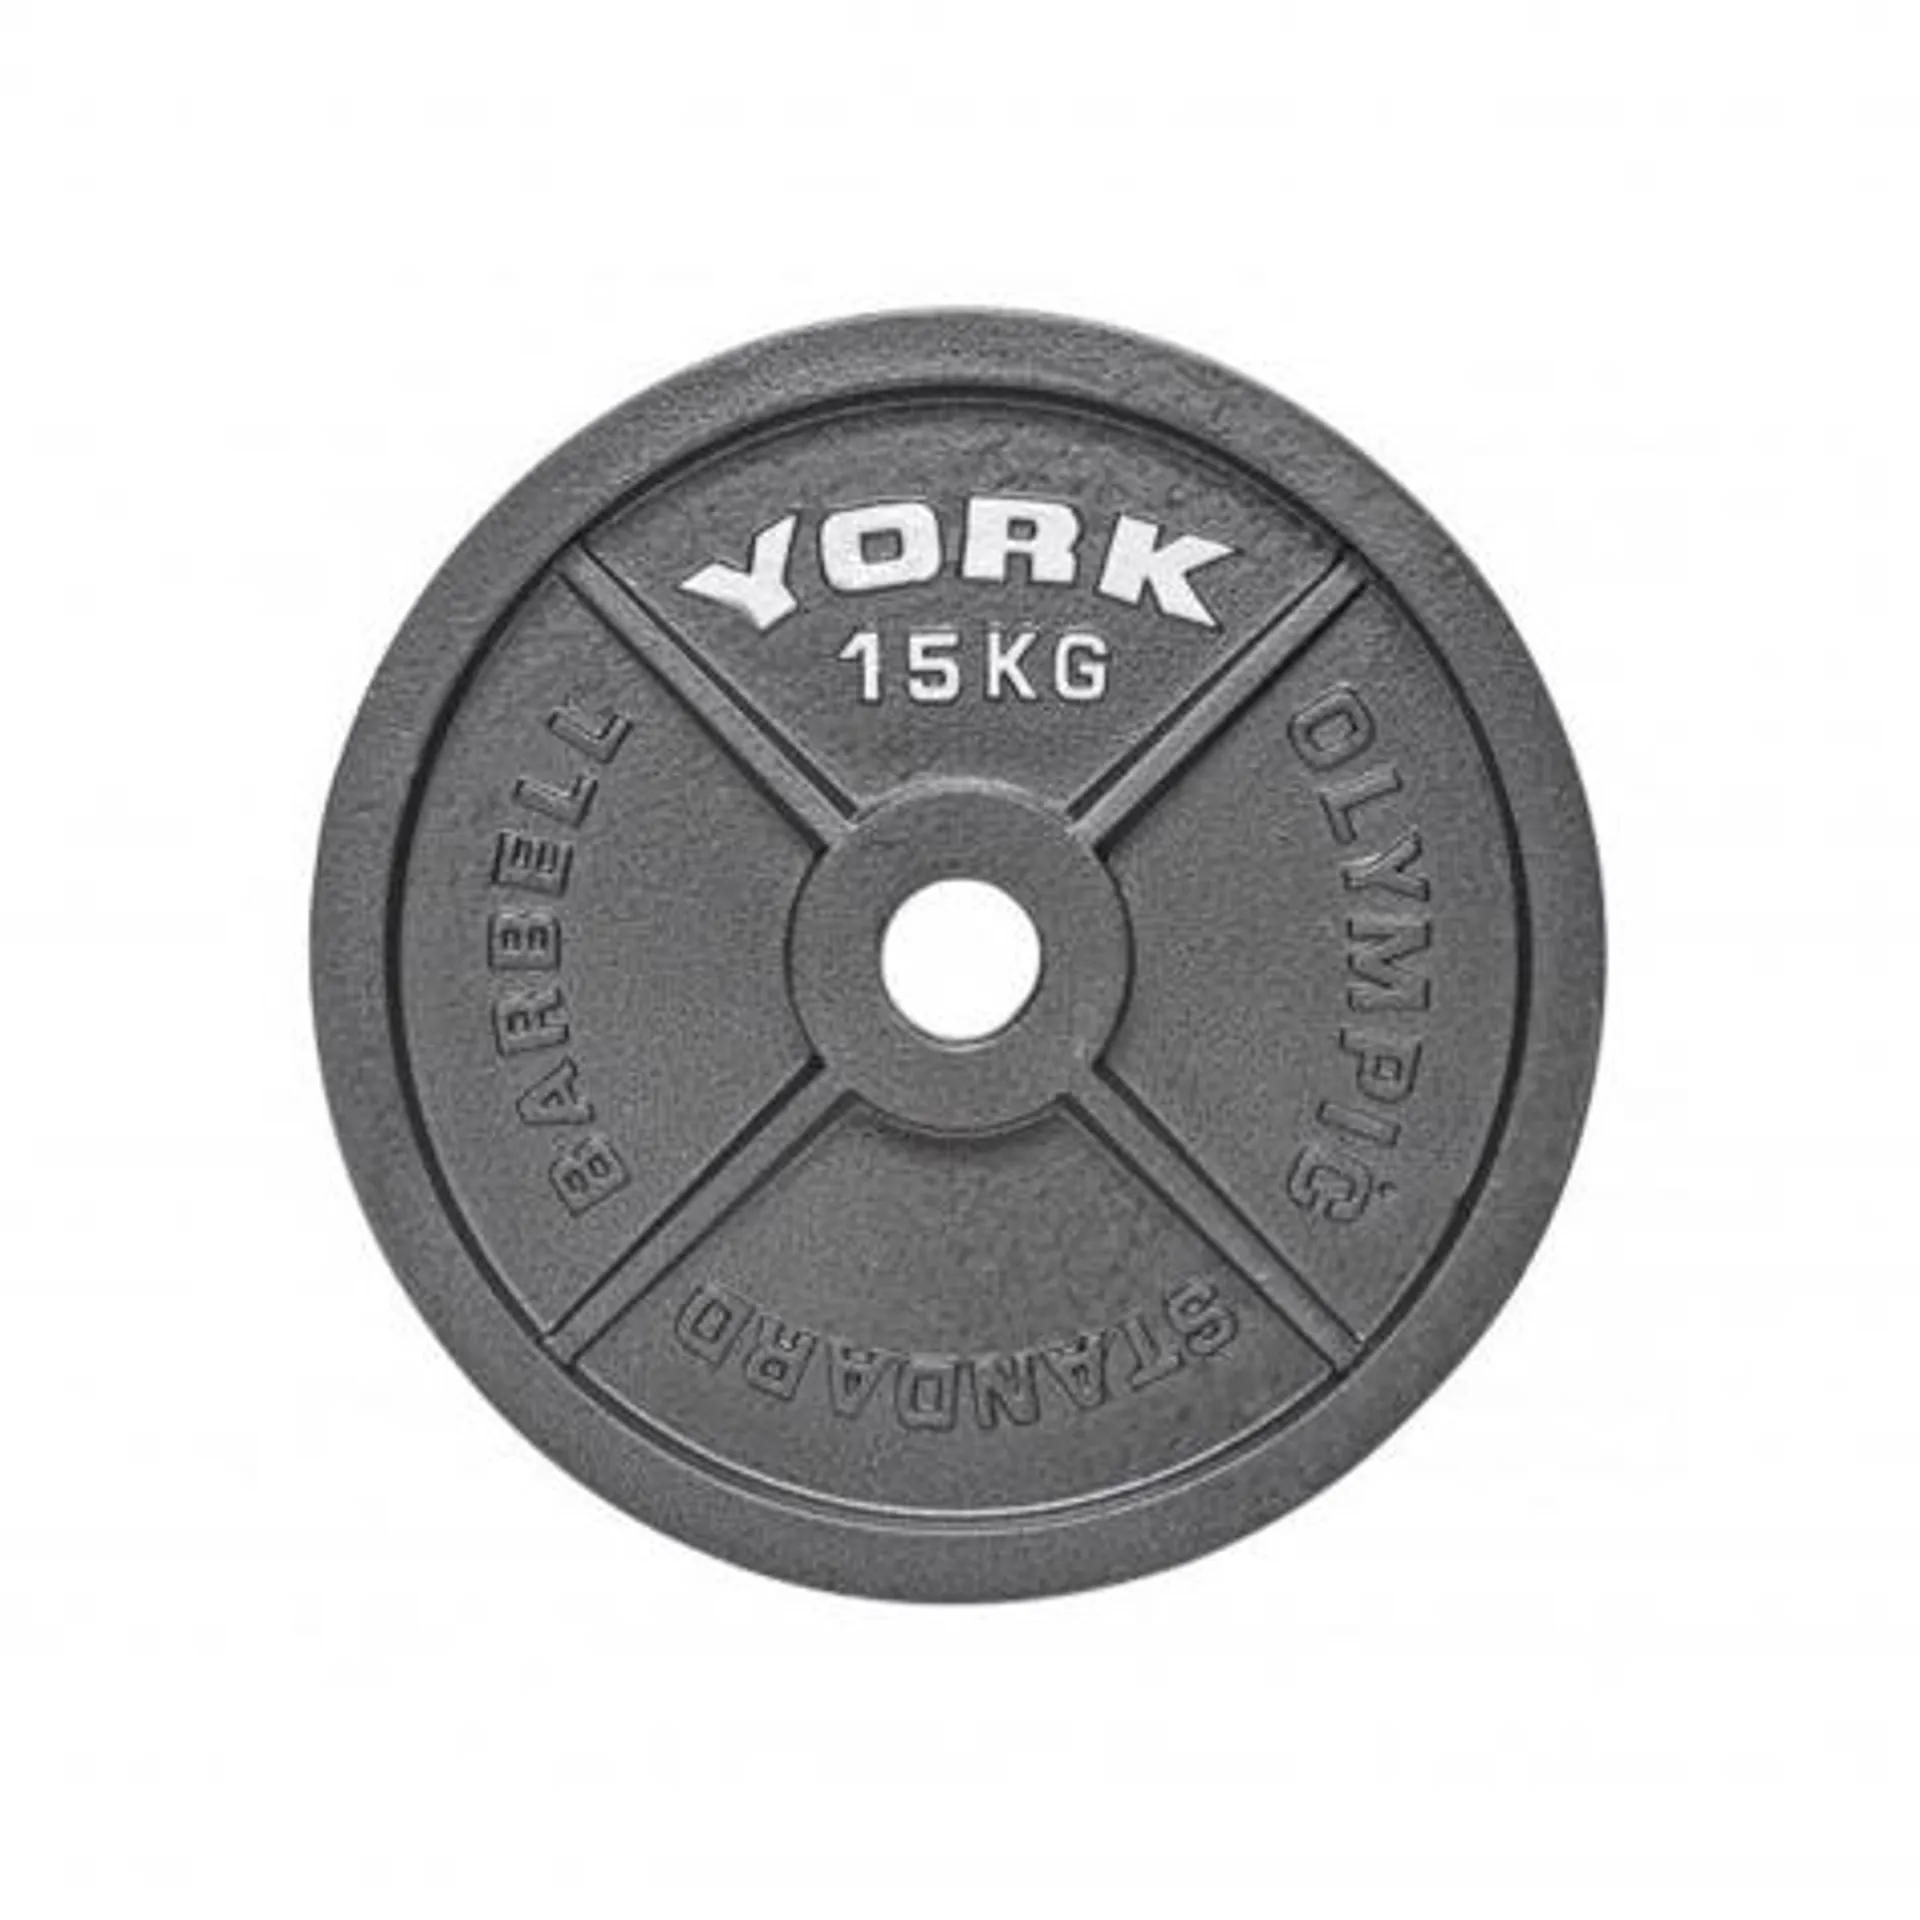 York 15kg Cast Iron Hammertone Olympic Plate (x1)